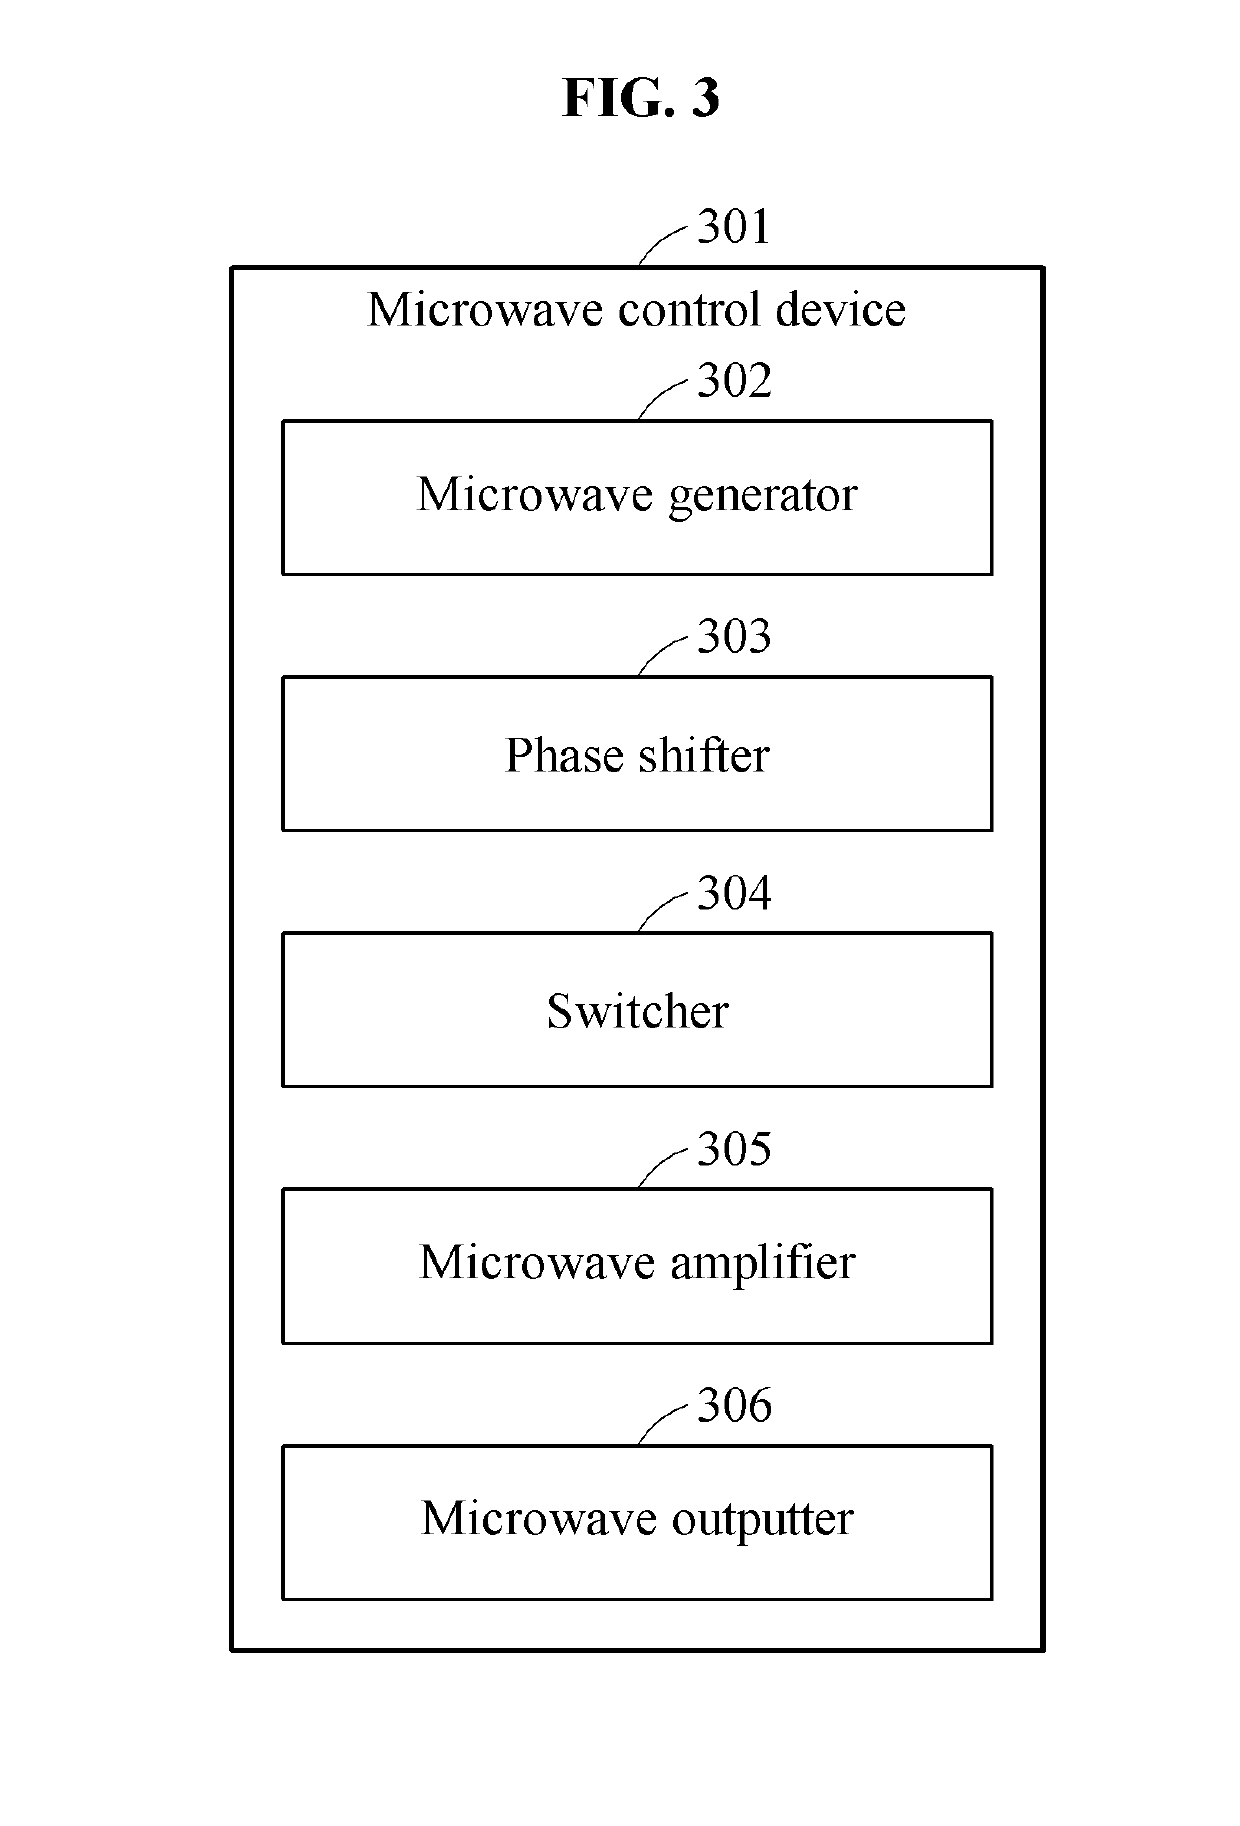 Apparatus for microwave hyperthermia